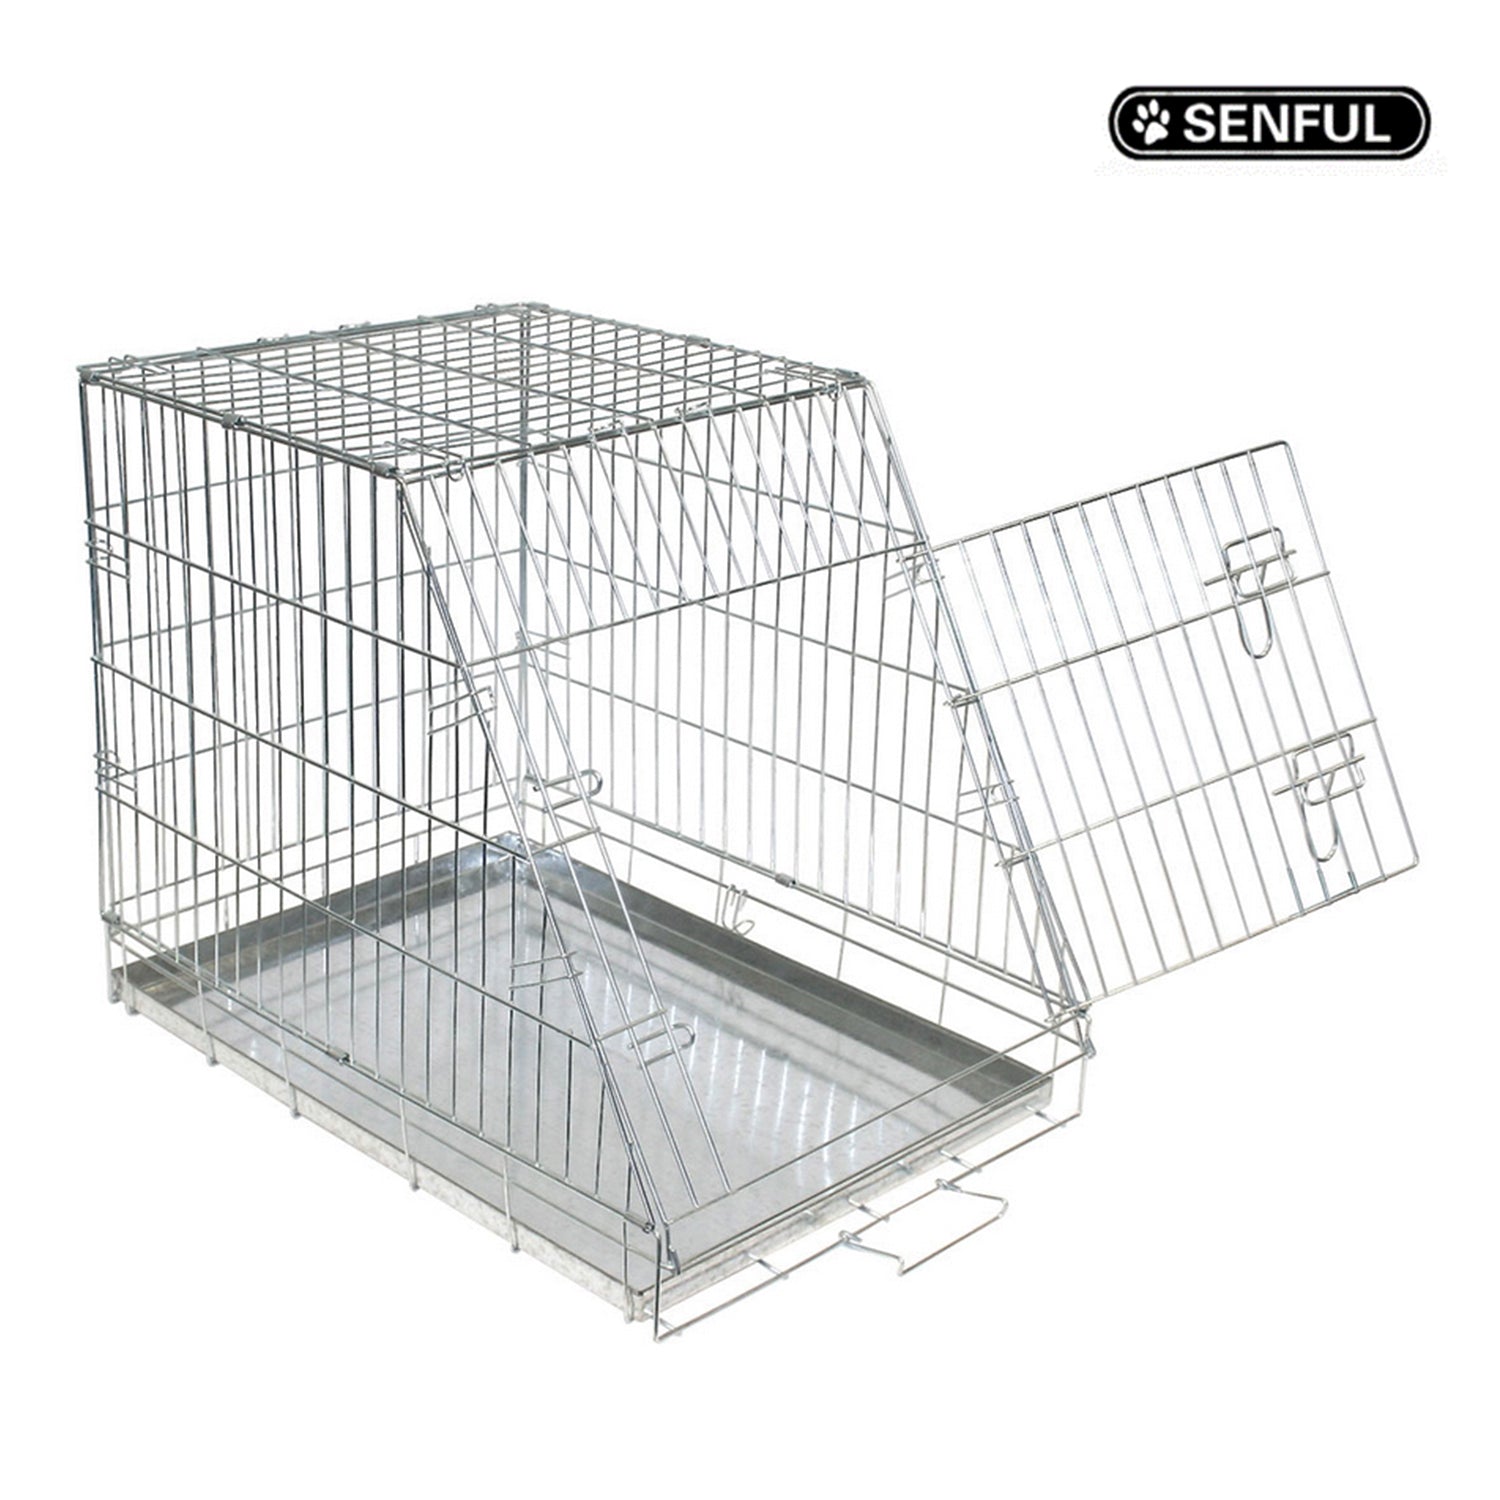 SENFUL Dog Kennels, Folding Metal Pet Kennel Wire Cage, Silver, 35.43"L x 23.1"W x 26.18"H